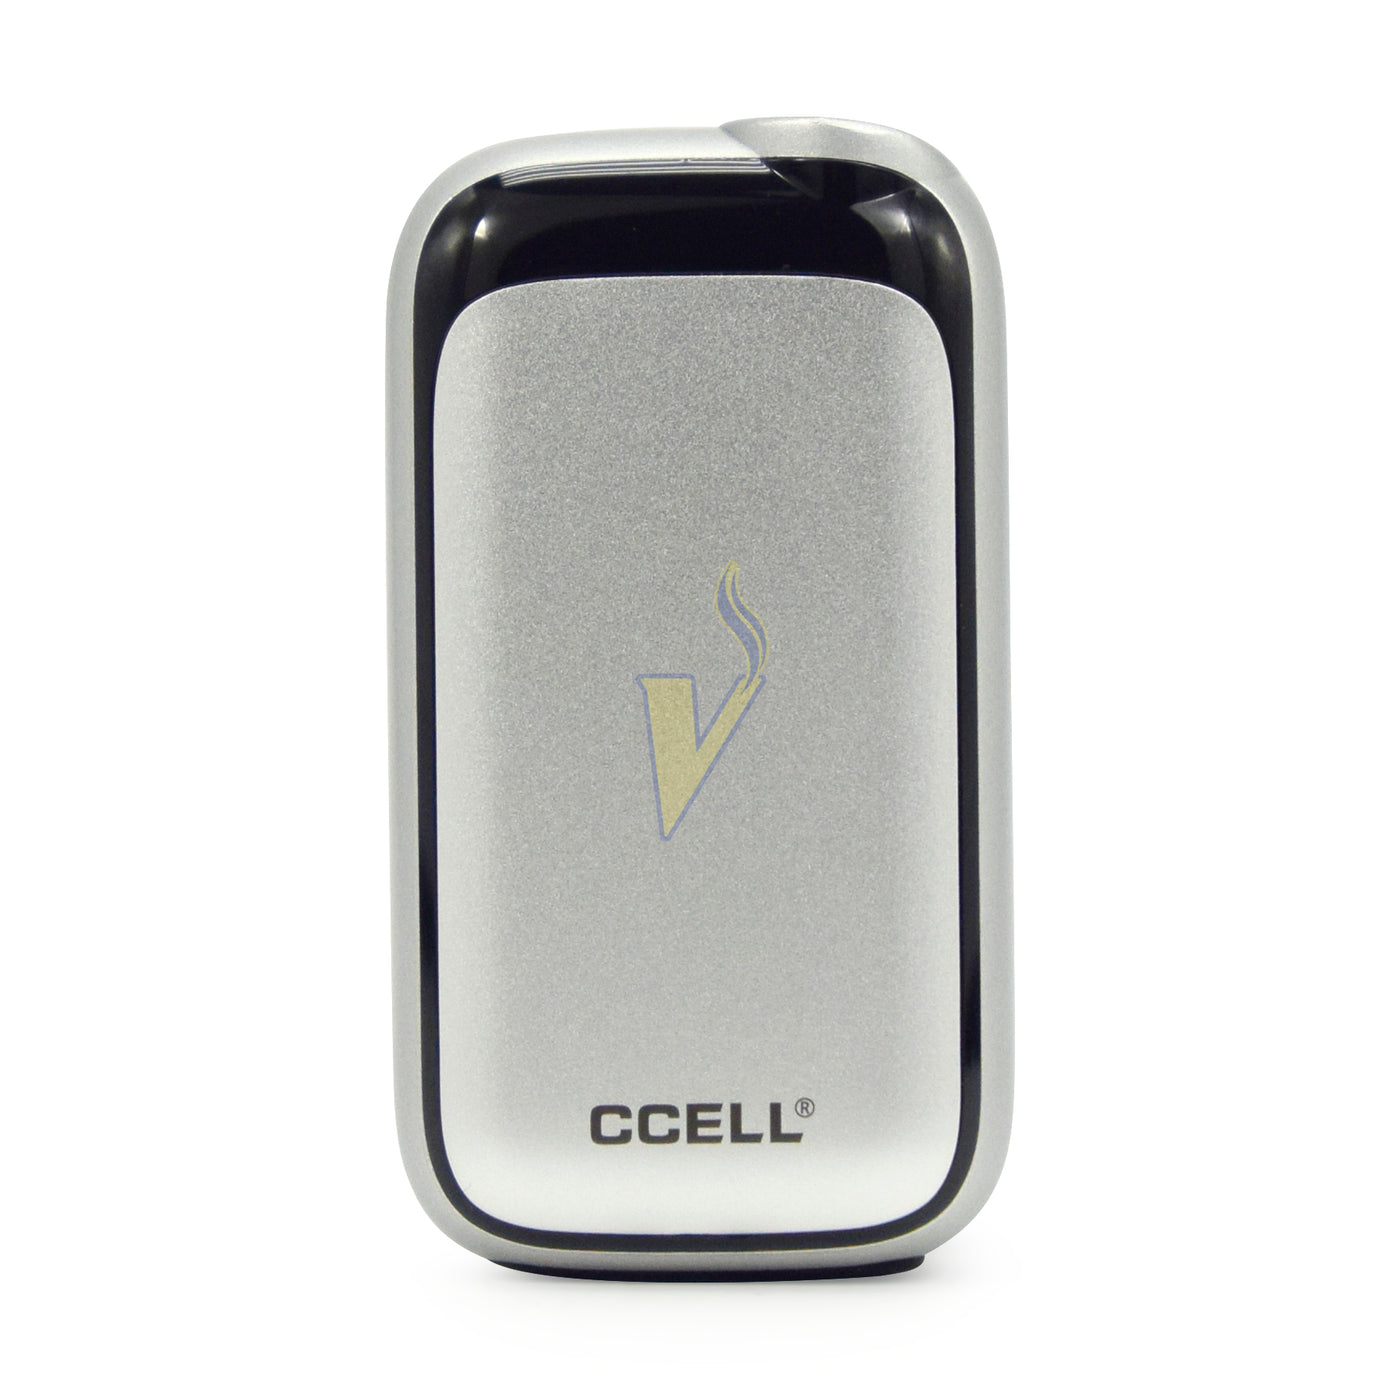 Ccell Rizo Vaporizer Battery